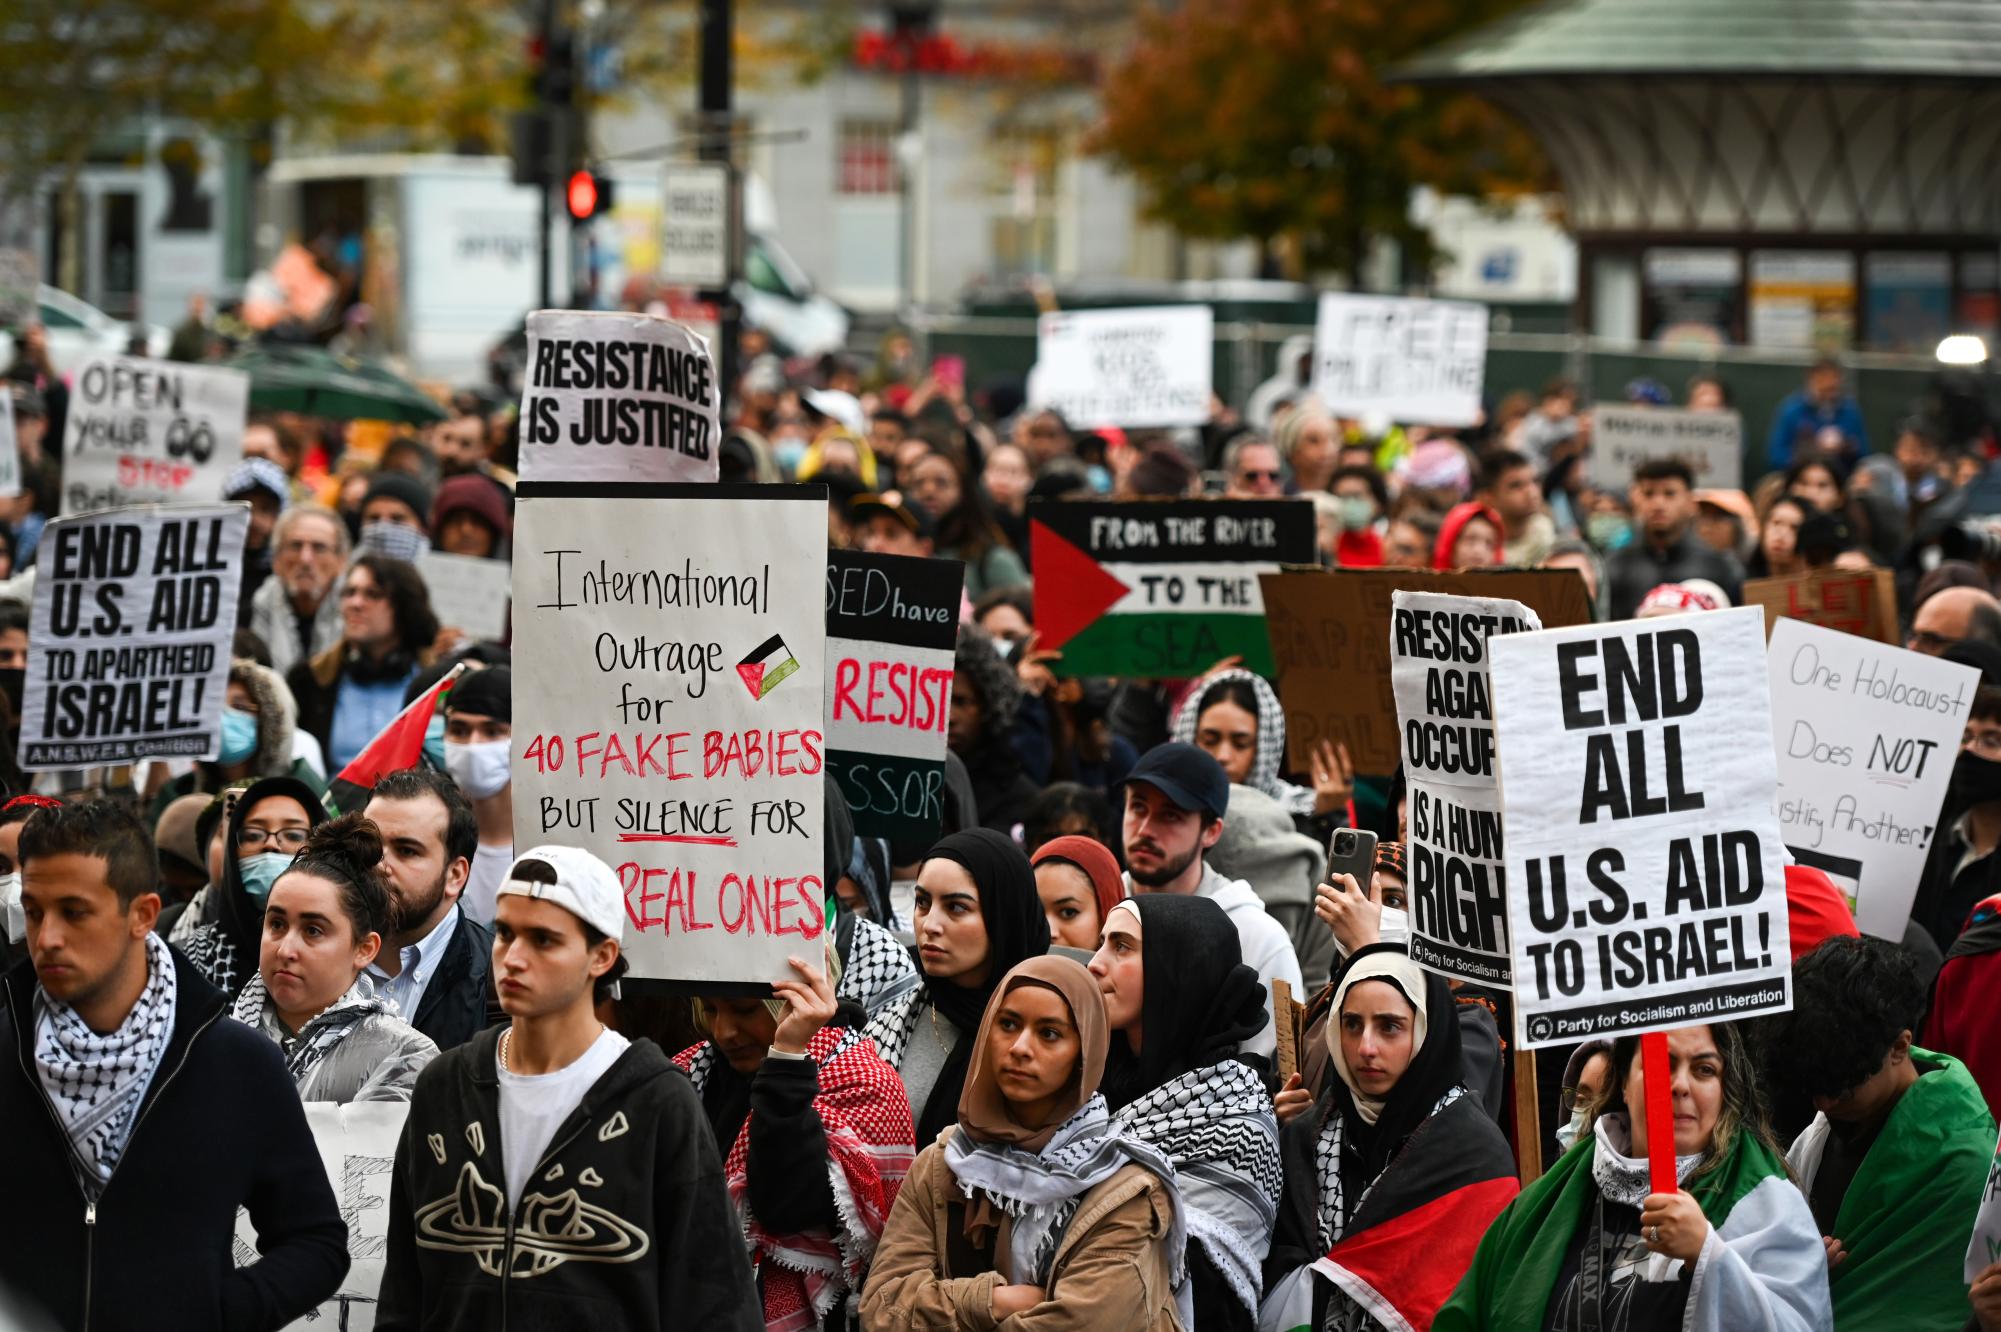 Gaza+Strip+Bombings+Spark+Protests+in+the+Streets+of+Boston